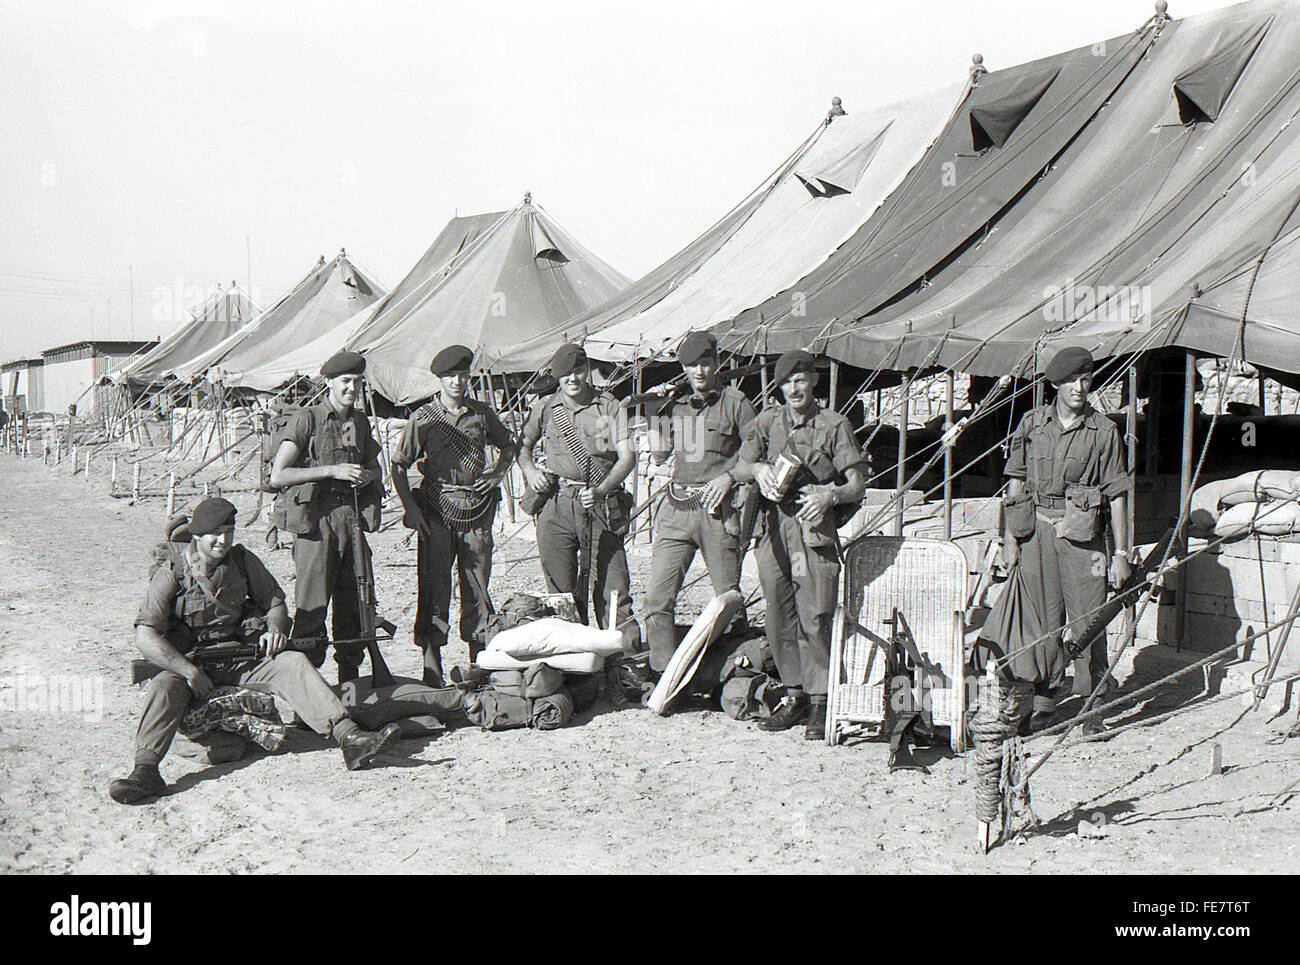 42 Cdo RM patrol prep Khormaksar airfield Aden Yemen 1967 British withdrawal Stock Photo